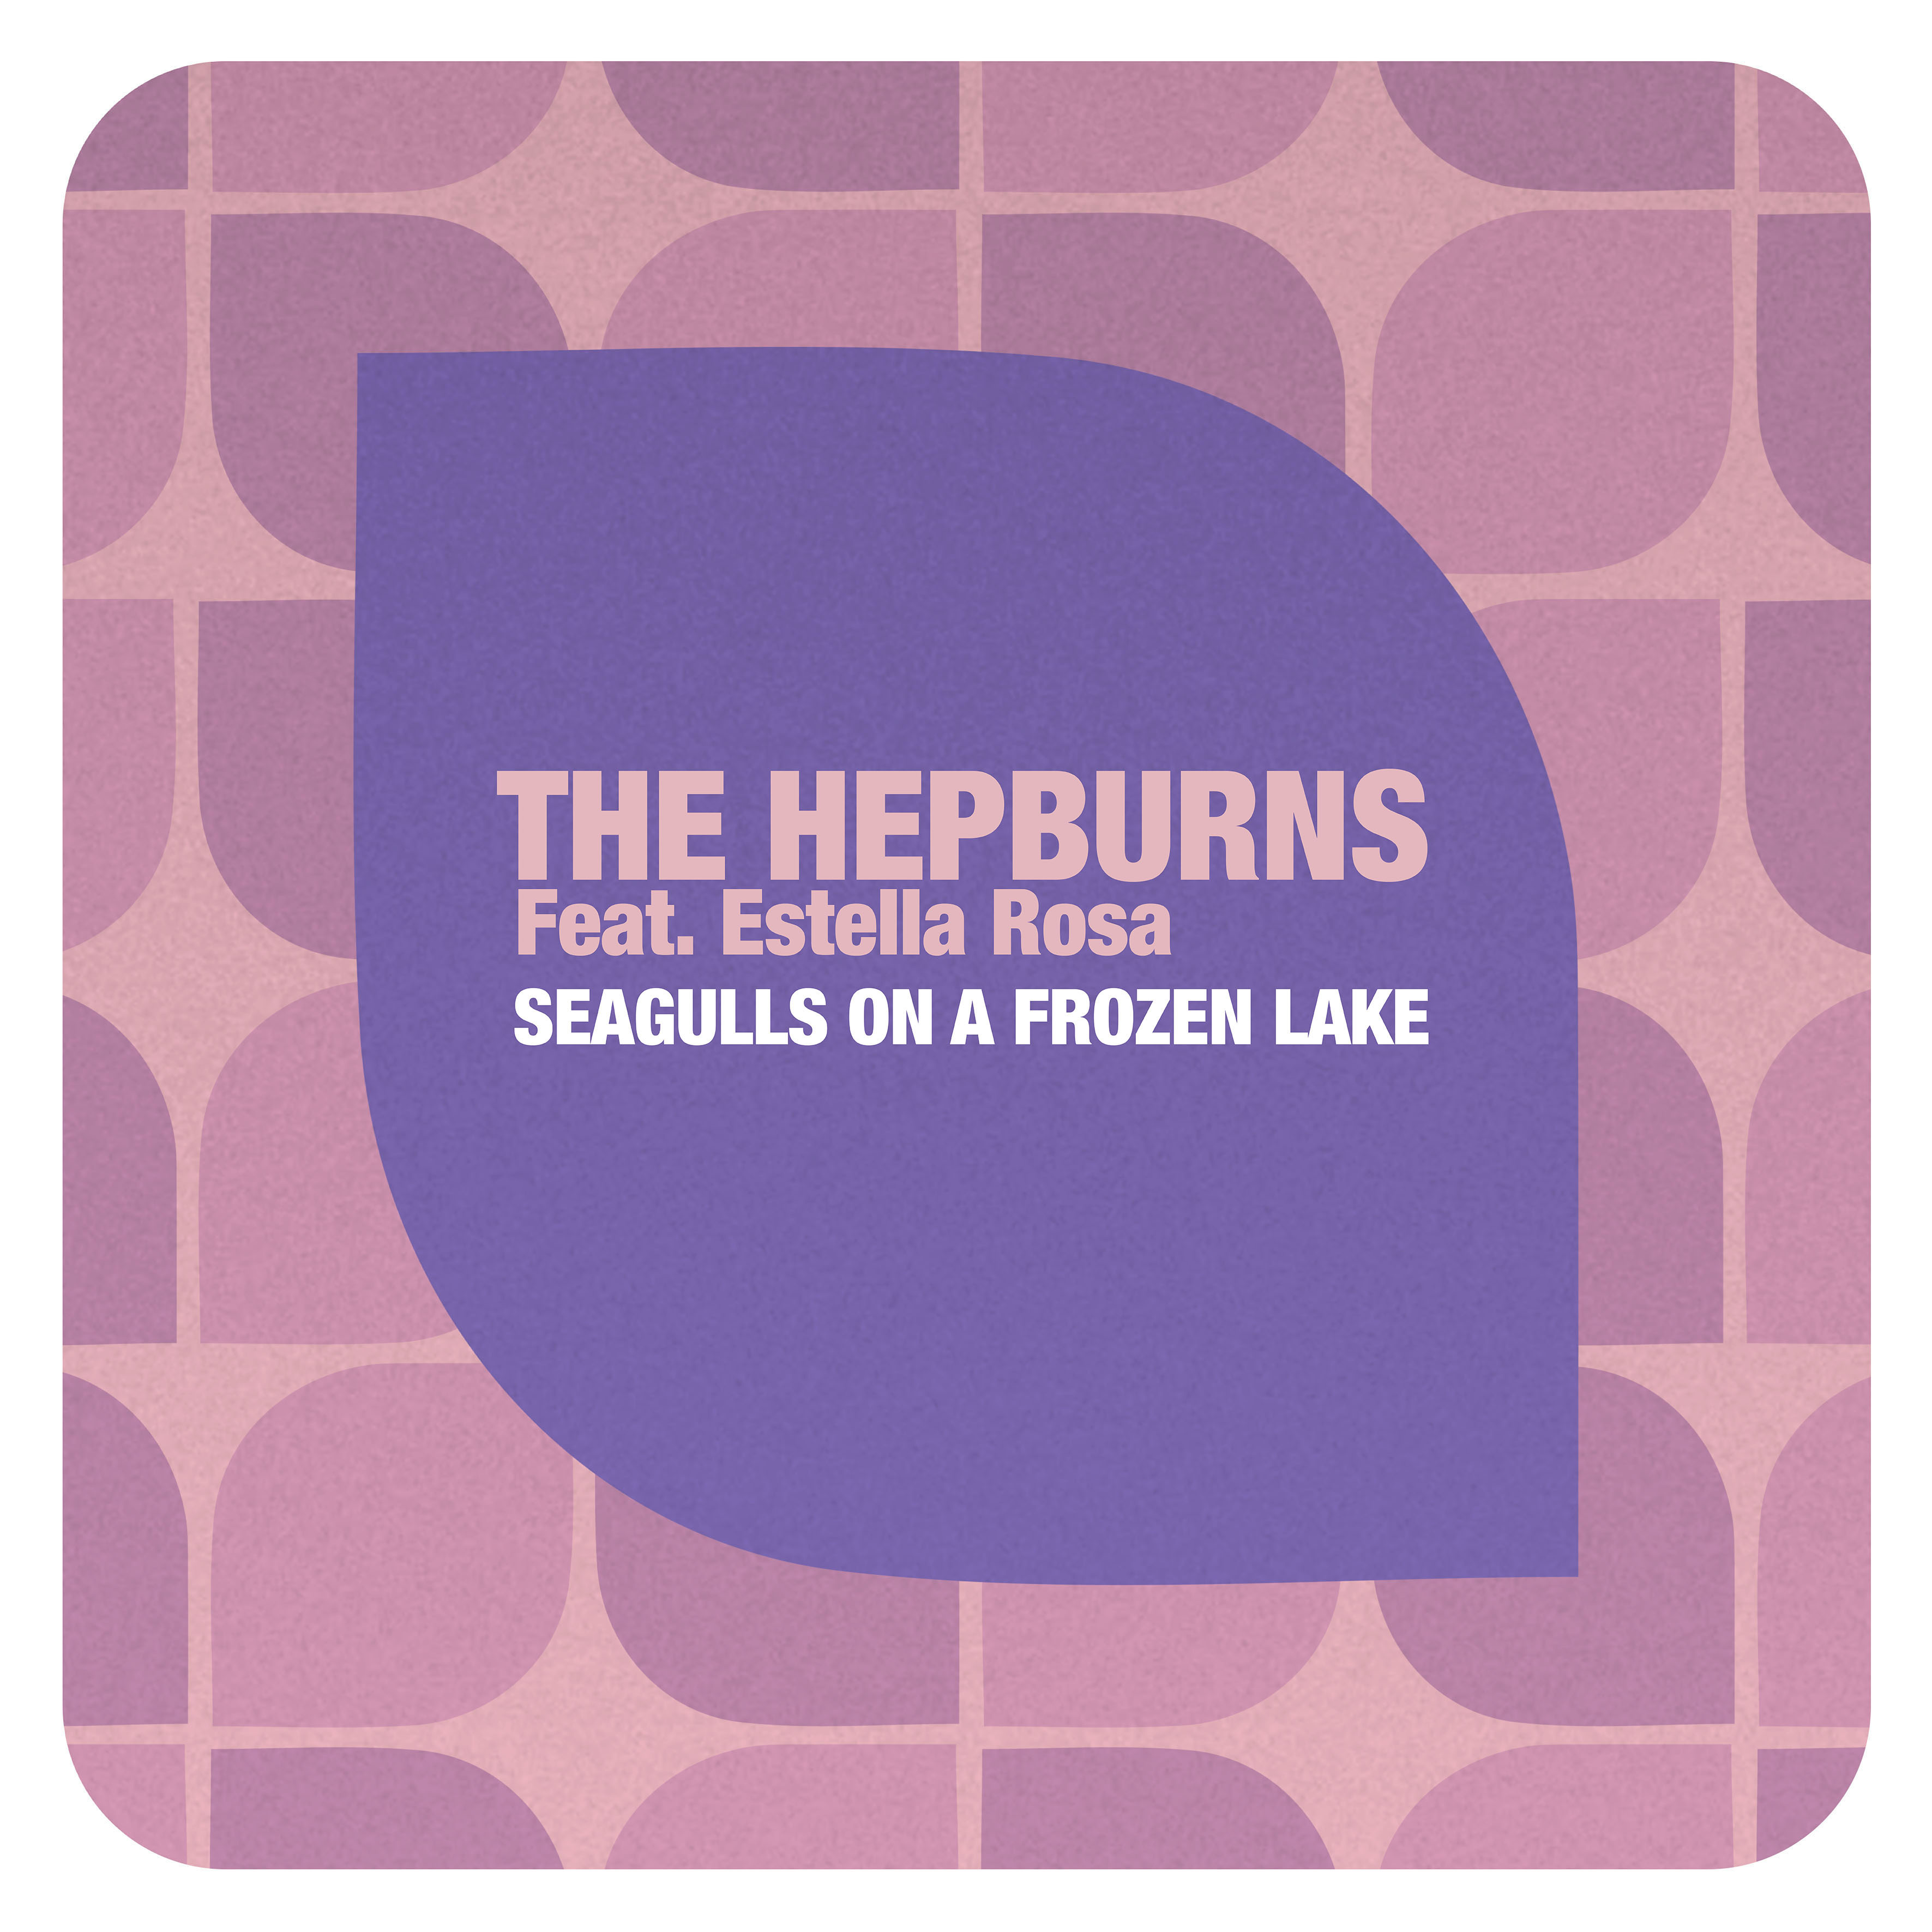 THE HEPBURNS (feat. Estella Rosa) "Seagulls On A Frozen Lake" Single Digital